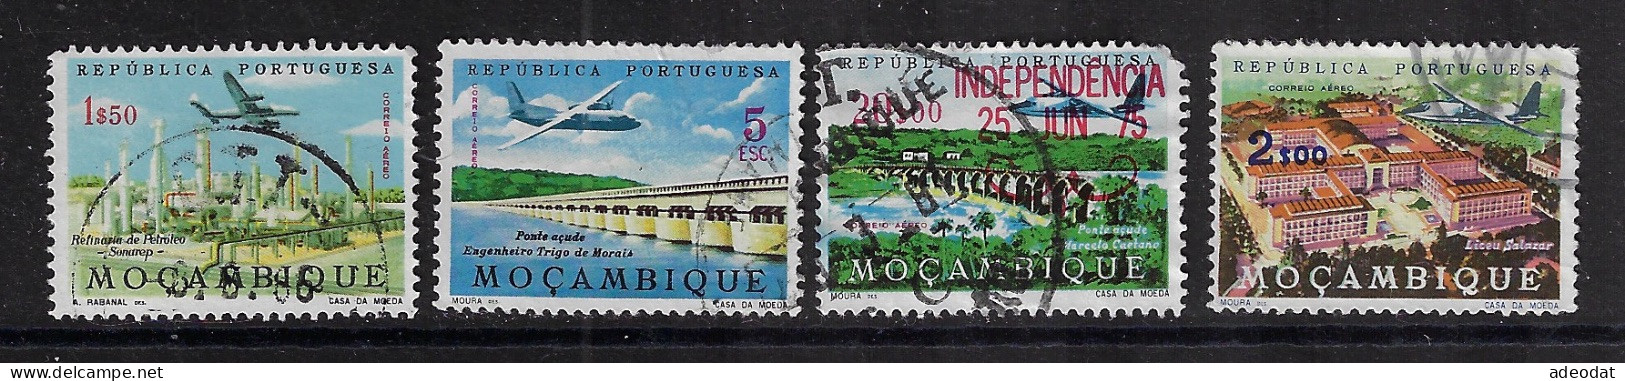 MOZAMBIQUE  1963,1975  SCOTT#C29,C30,C33,C38  USED  CV  $1.10 - Mosambik